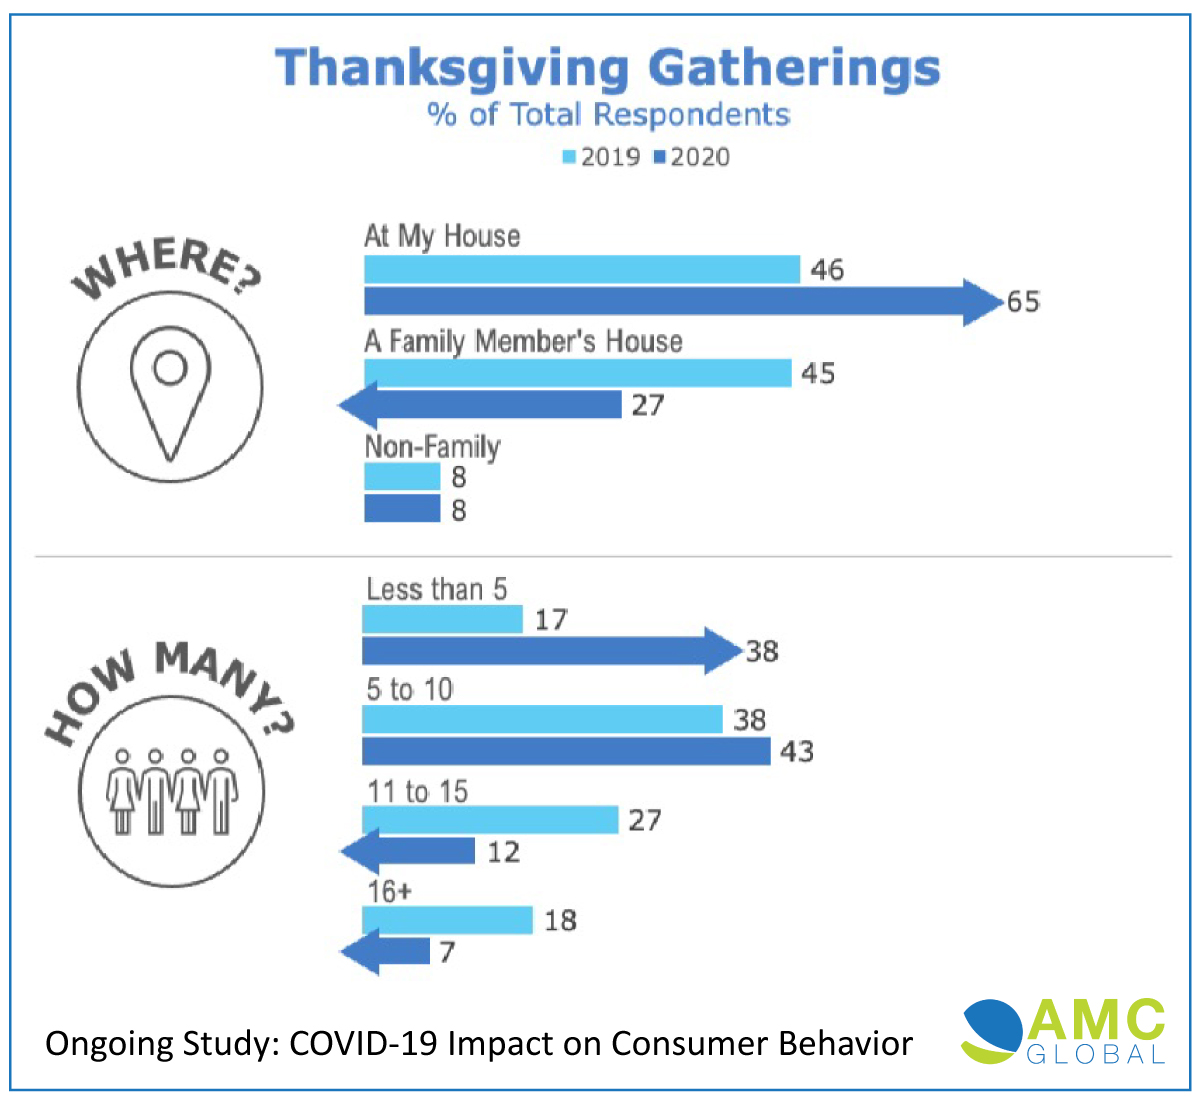 AMC Global Thanksgiving Plans